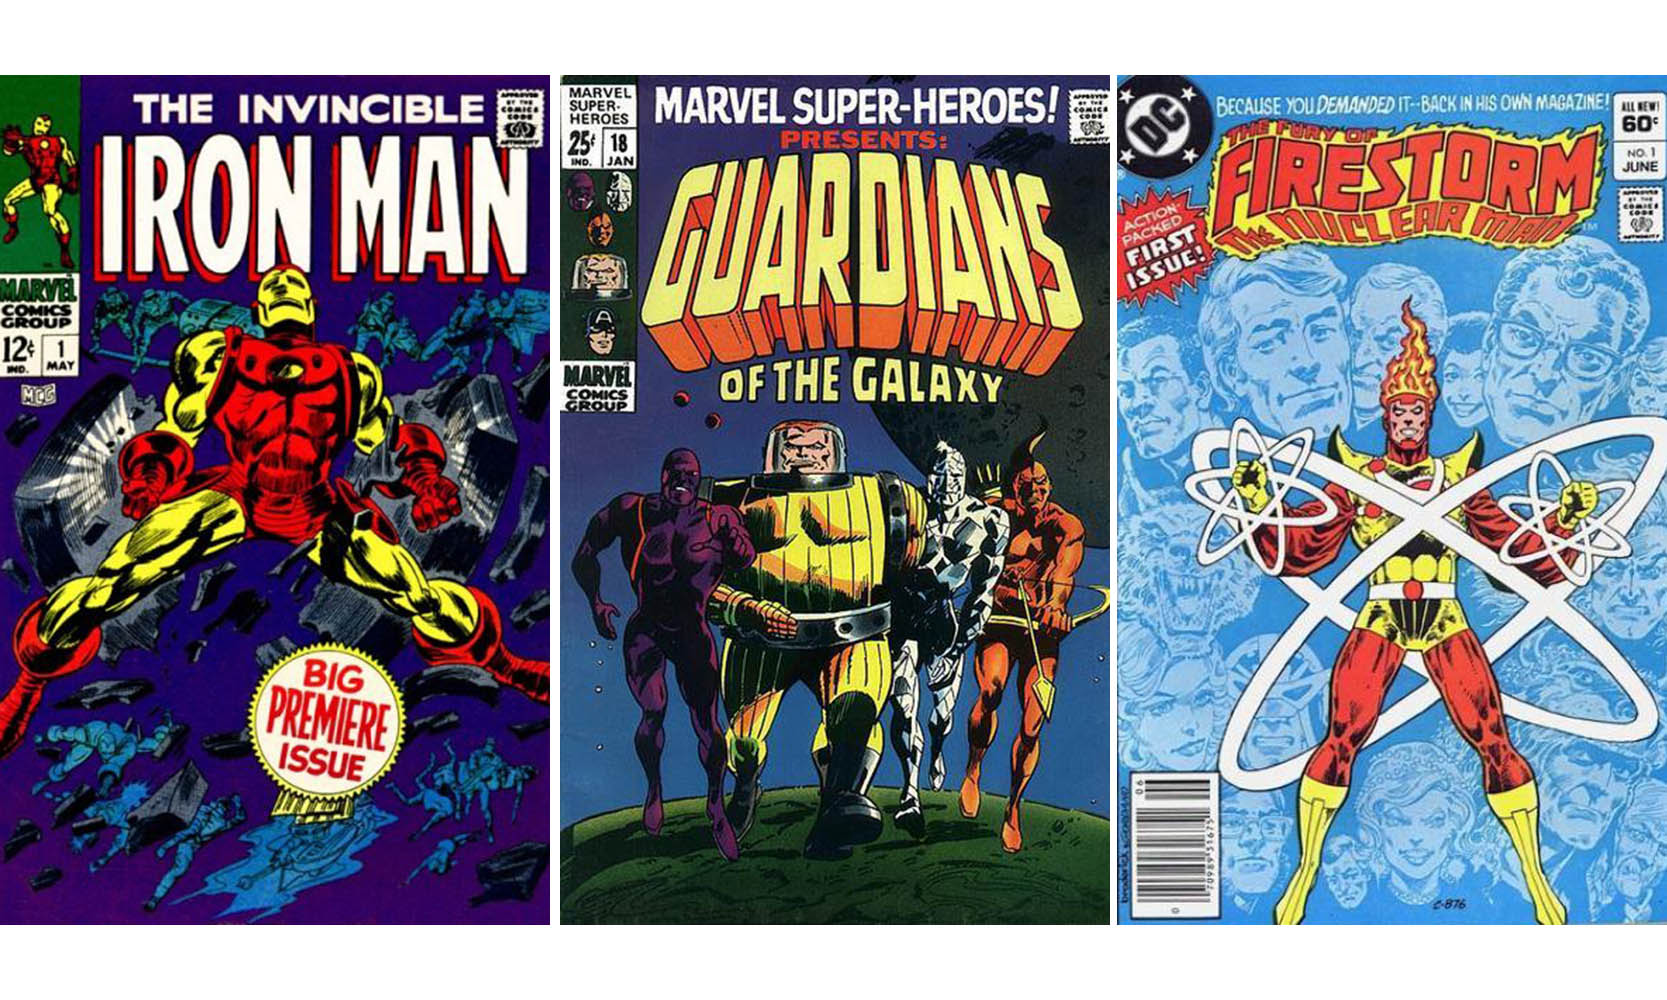 3 covers of comic books